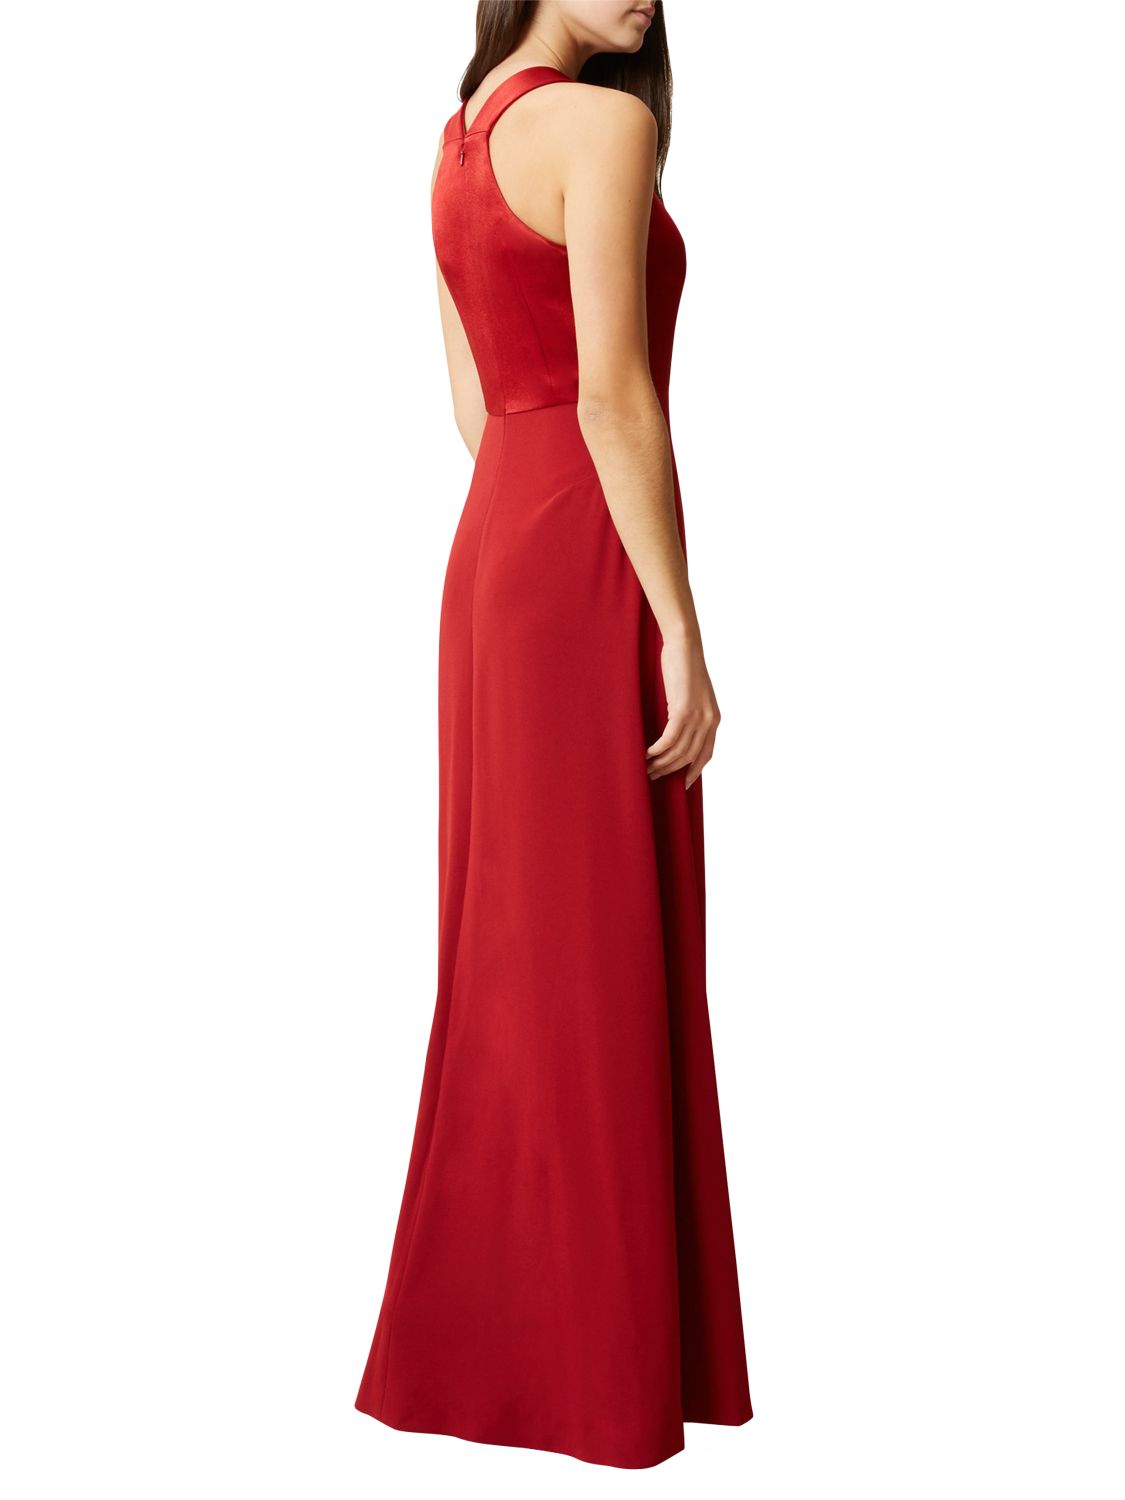 Hobbs Eliana Tailored Maxi Dress, Red